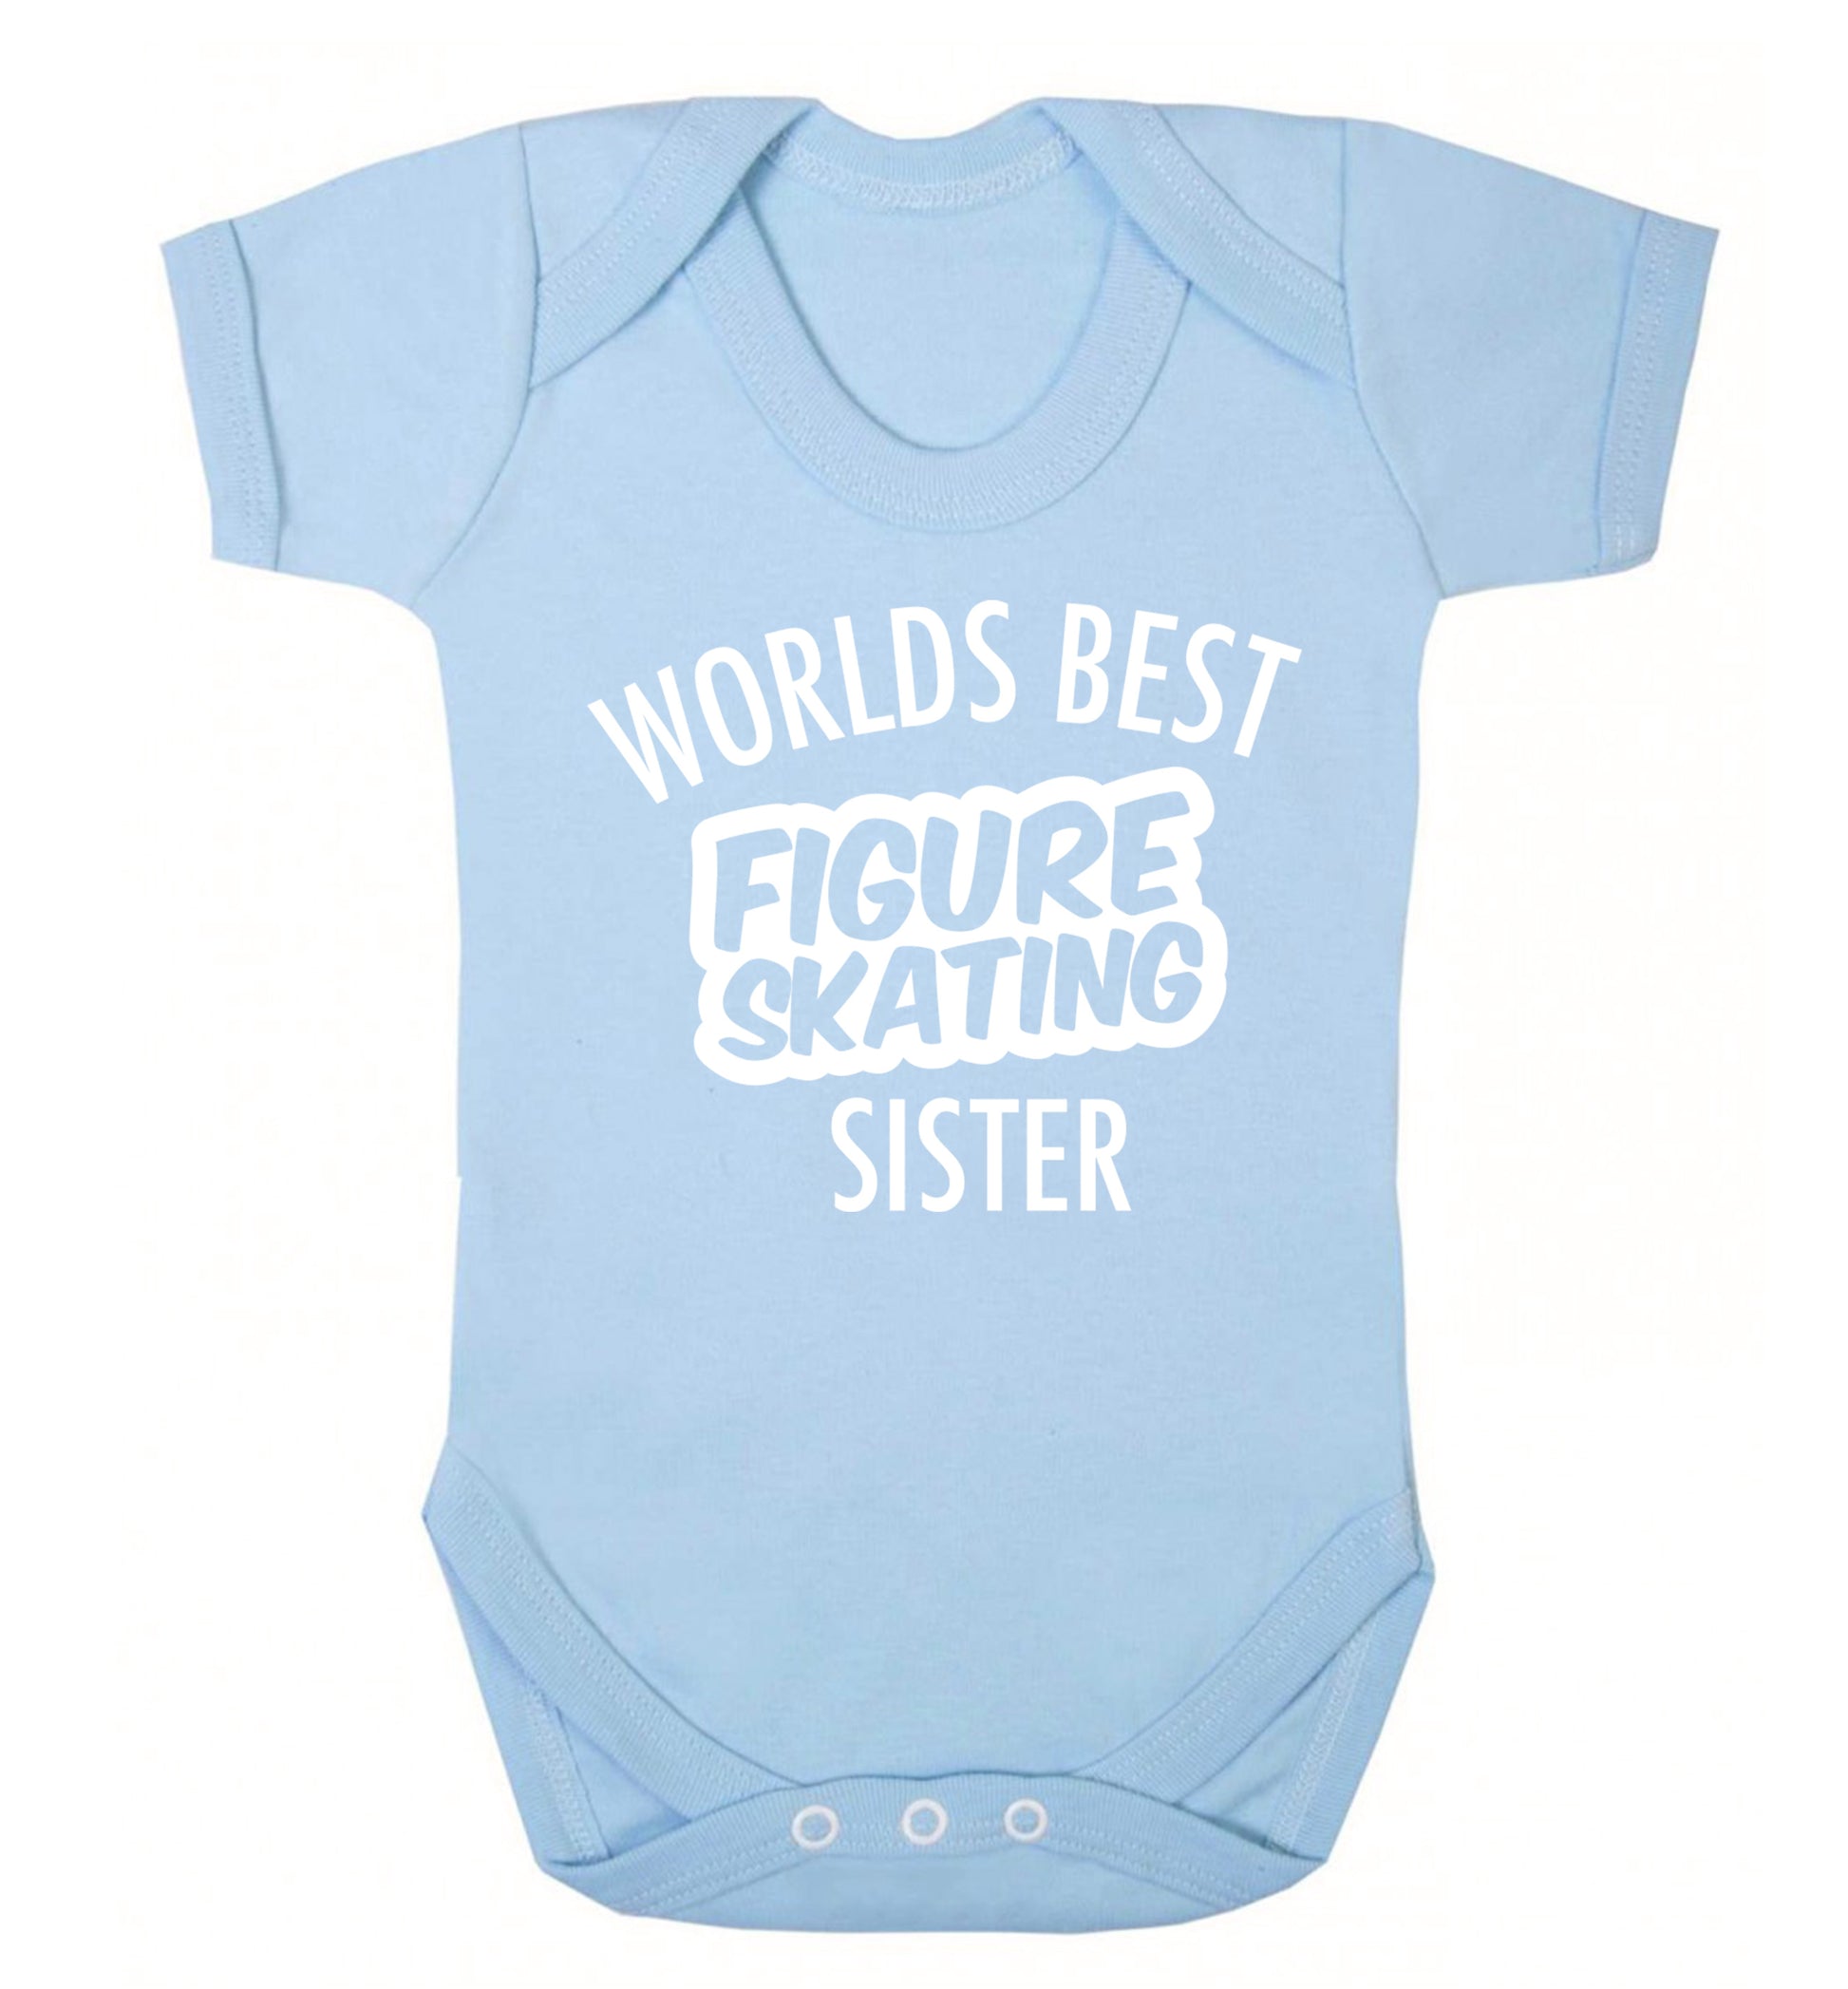 Worlds best figure skating sisterBaby Vest pale blue 18-24 months